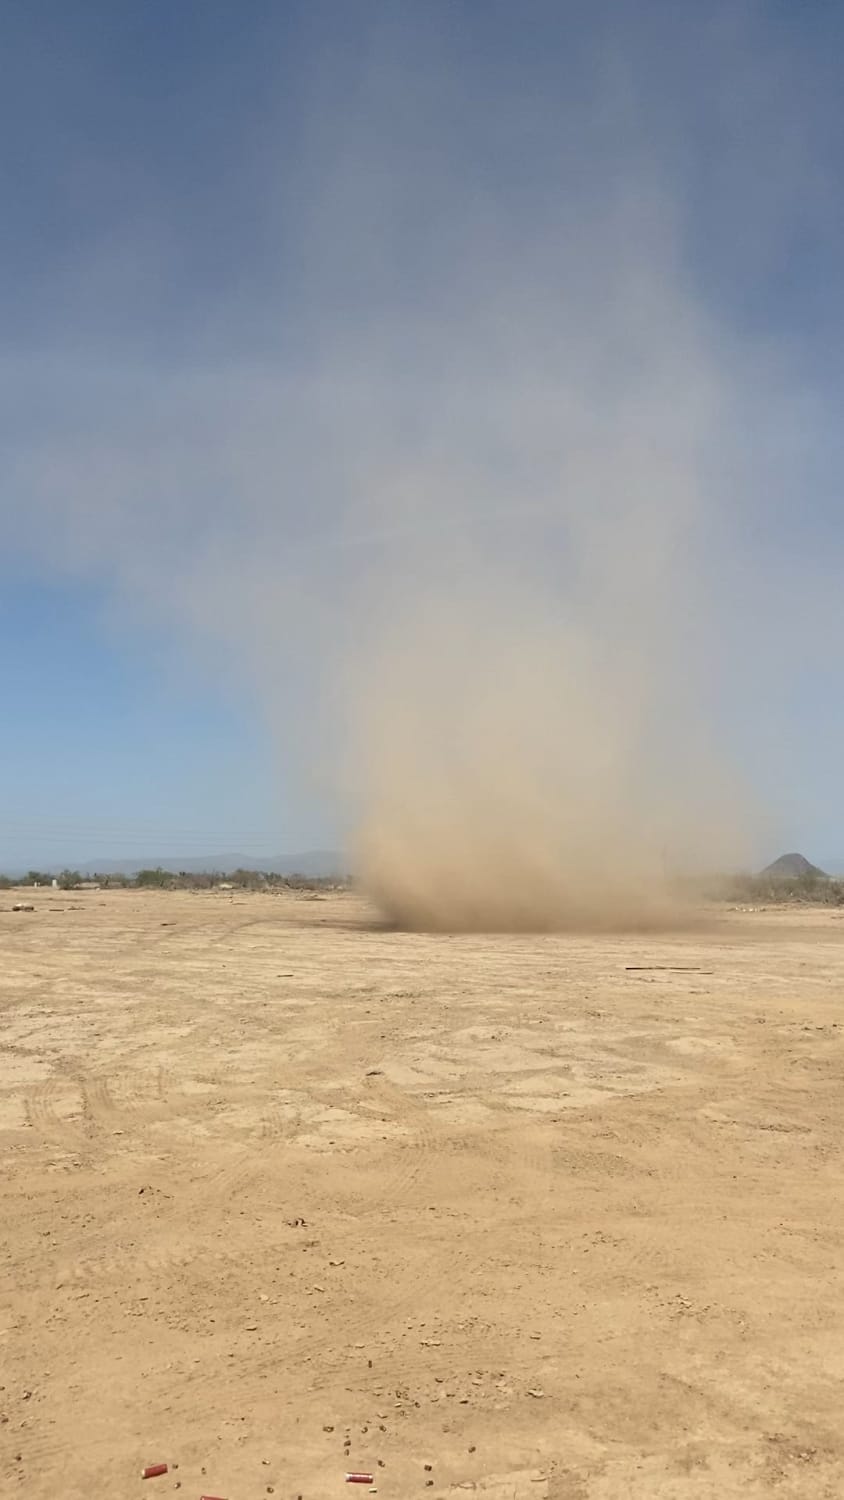 Dust devil in AZ, human for scale.